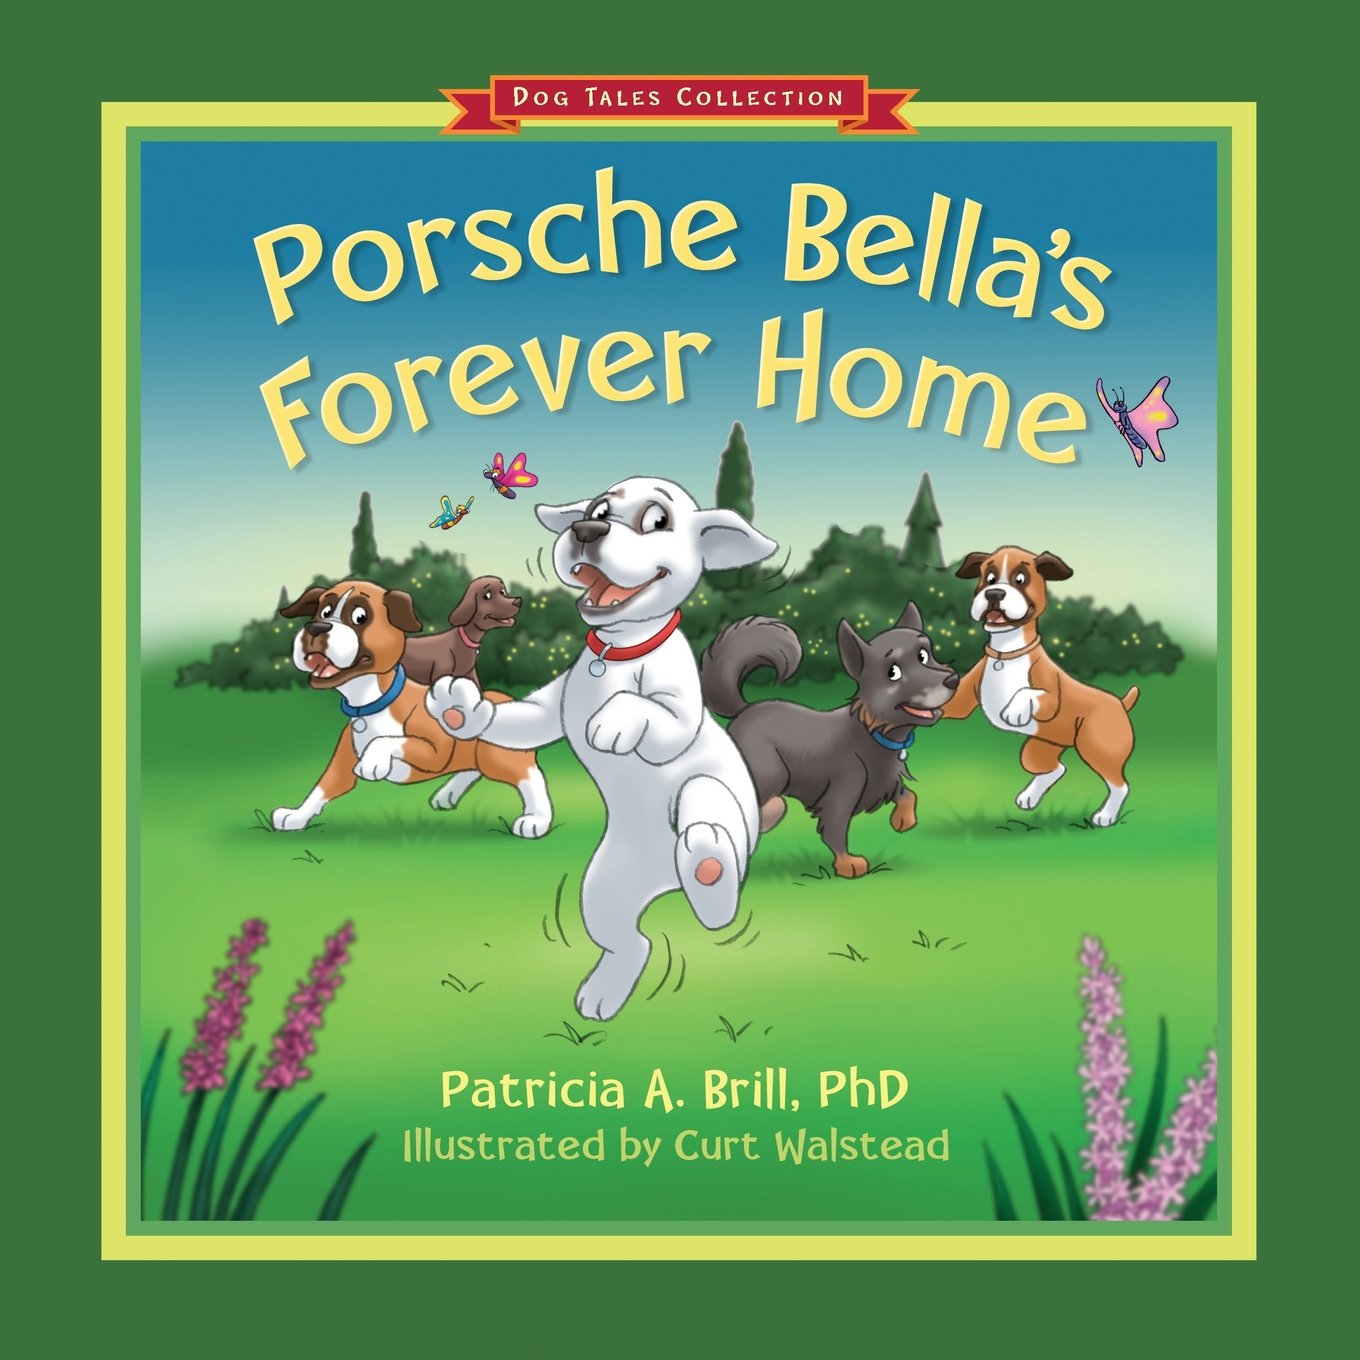 Award-Winning Children's book — Porsche Bella's Forever Home